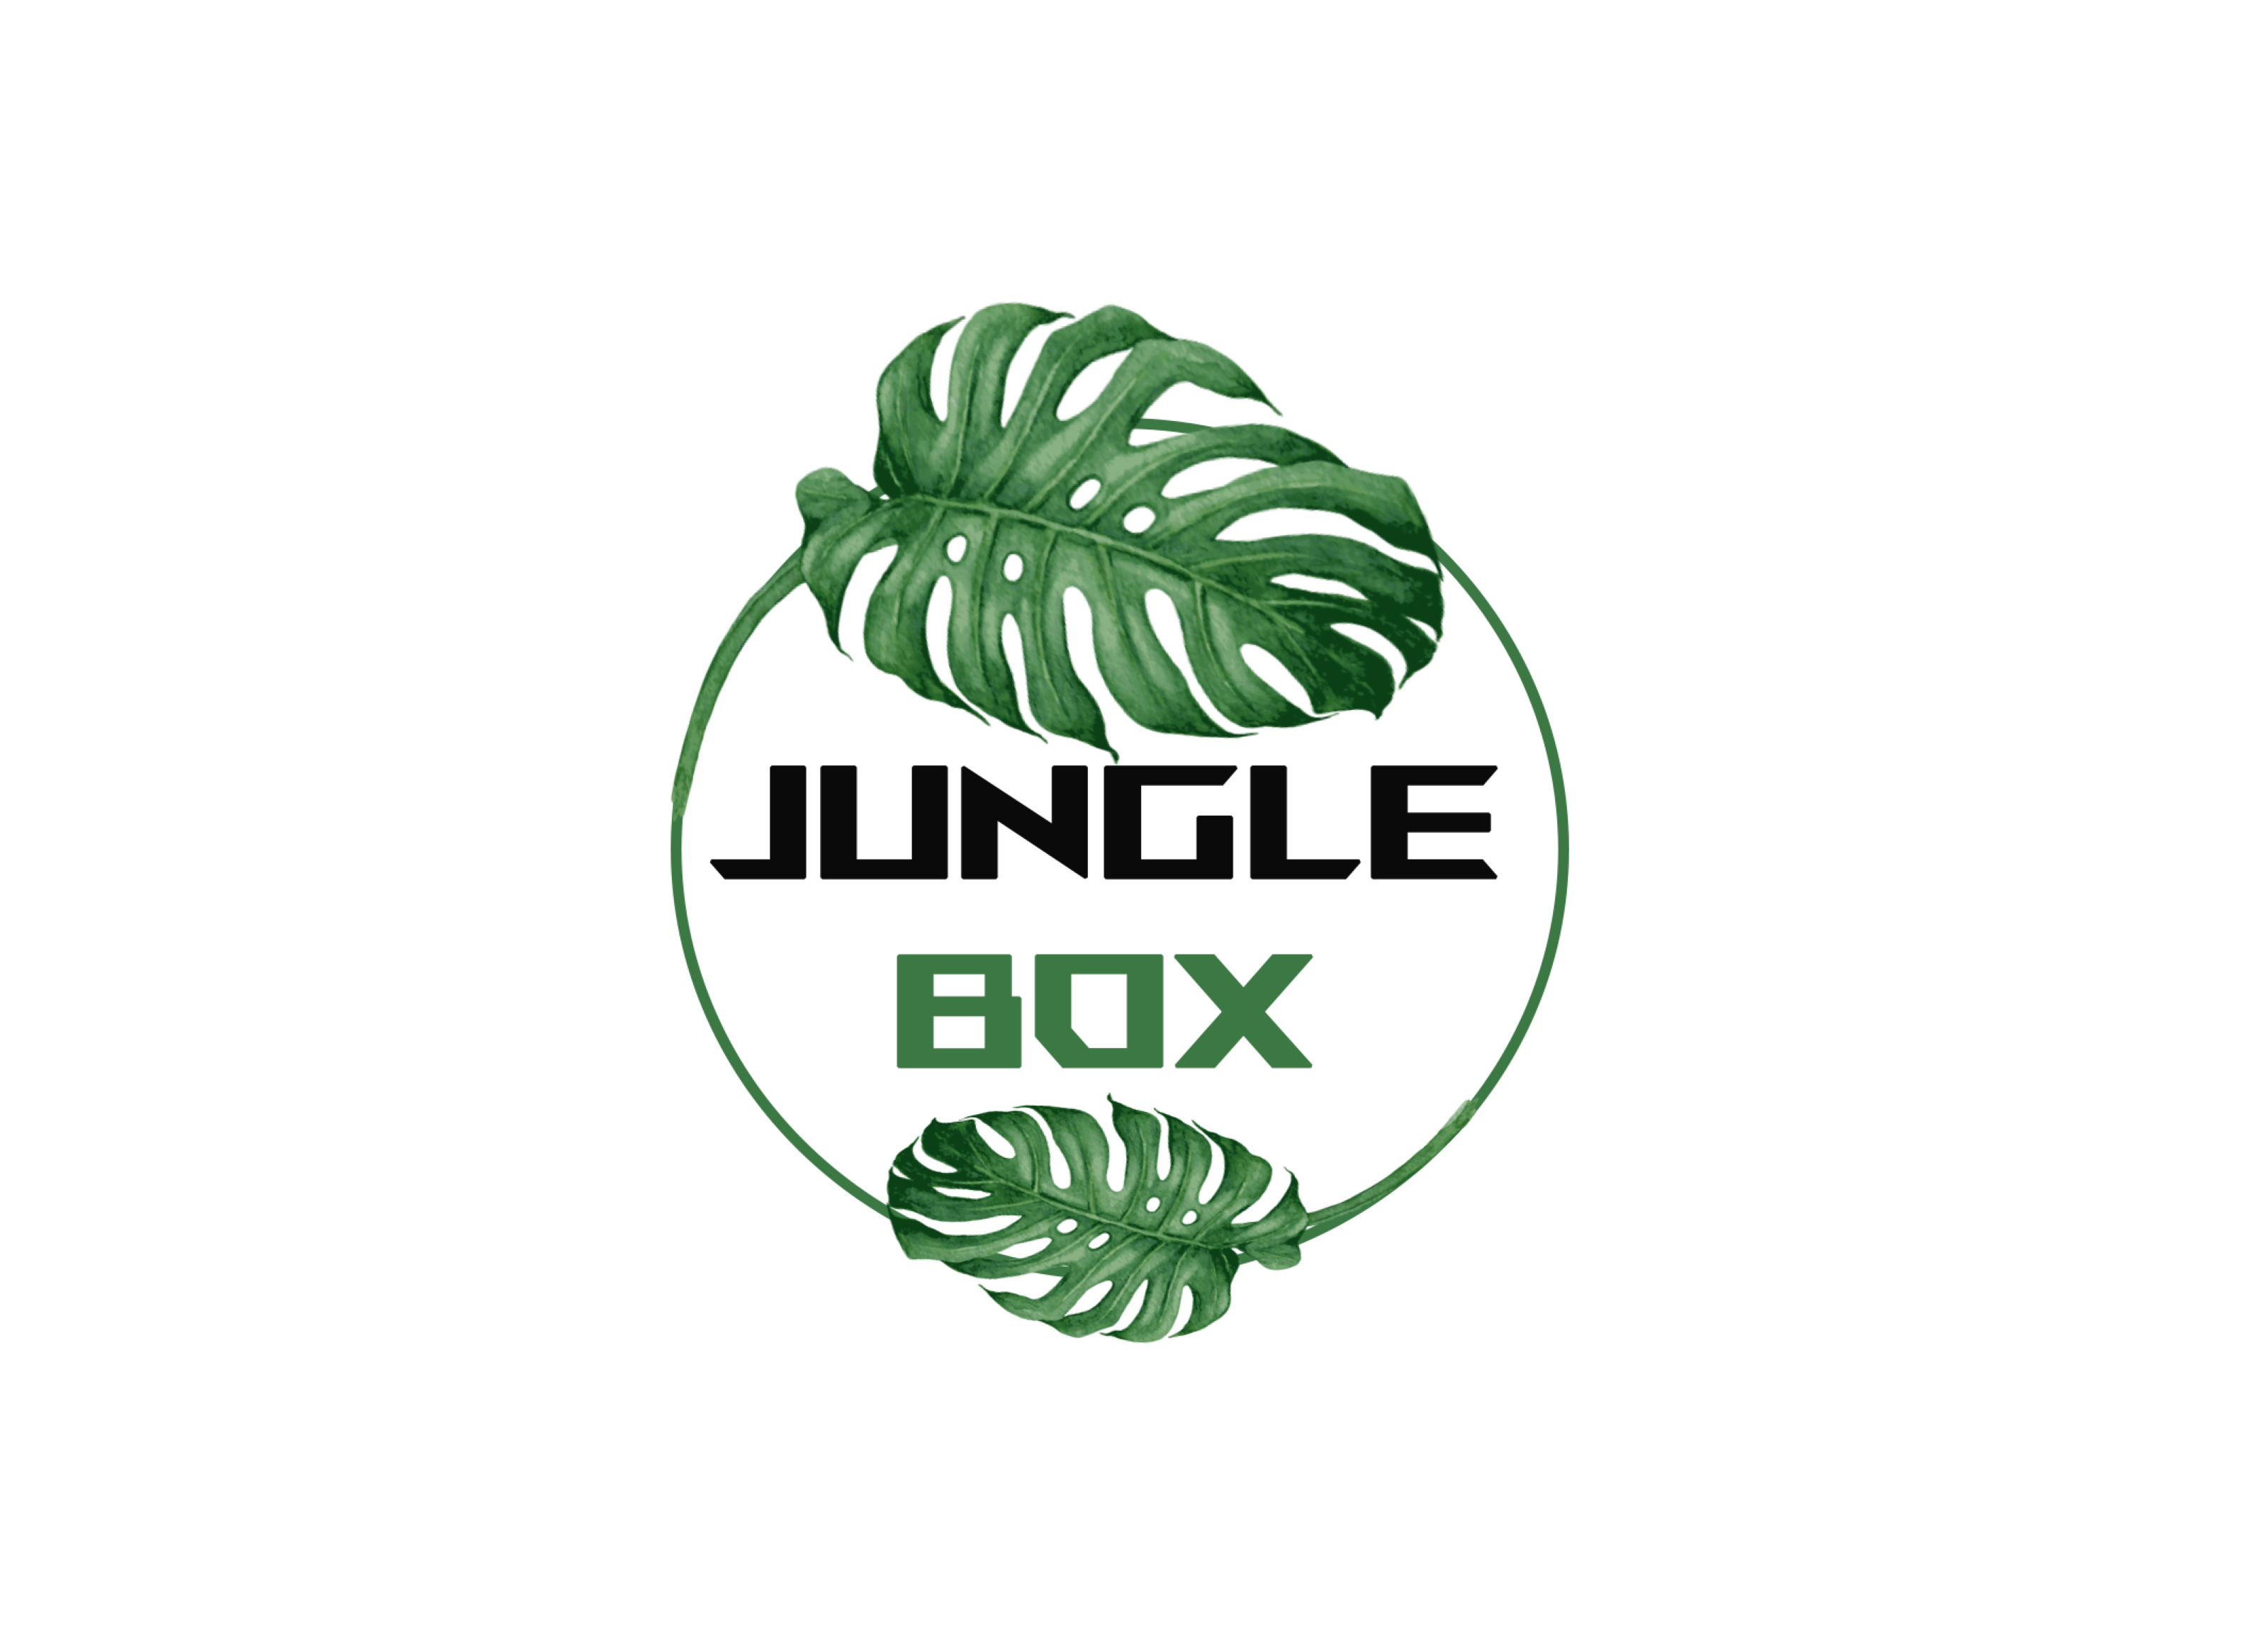 Junglebox